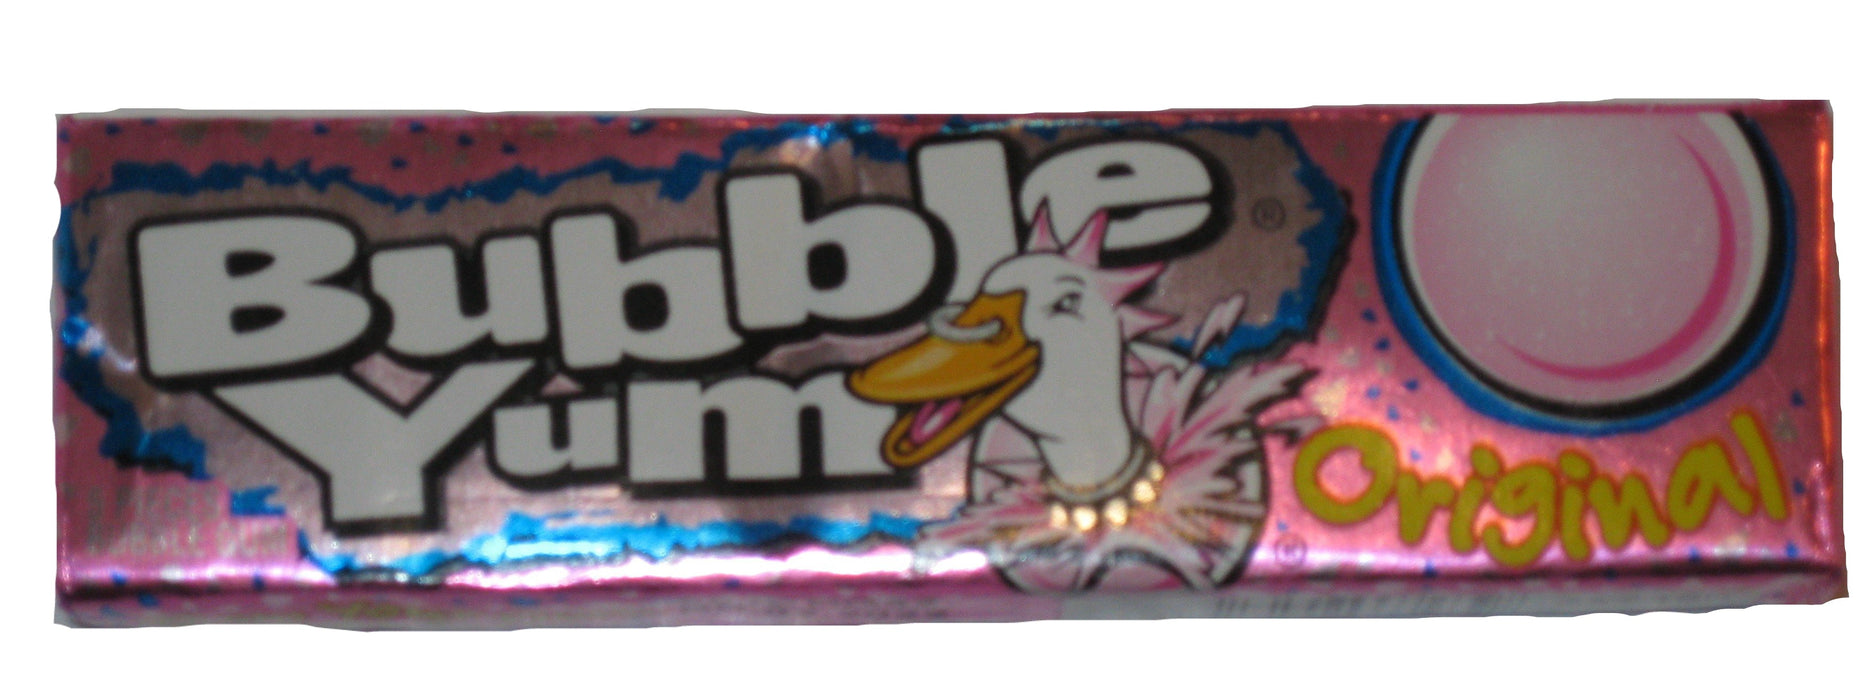 Bubble yum Original 5pc pack